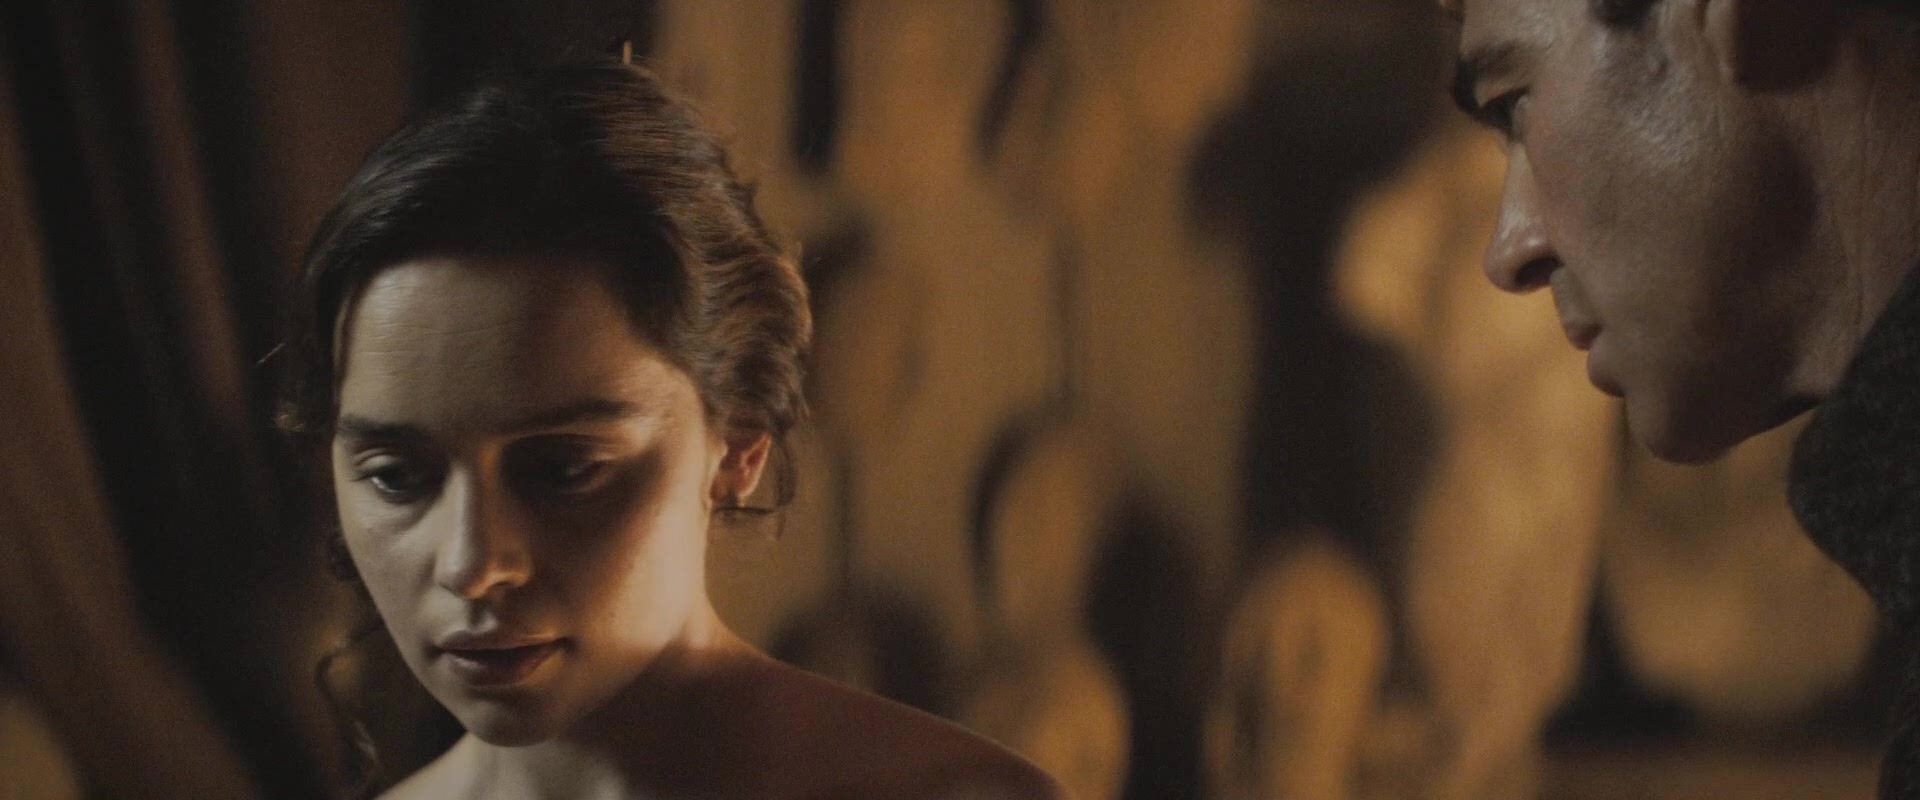 Indo Emilia Clarke nude - Voice from the Stone (2017) Pareja - 1